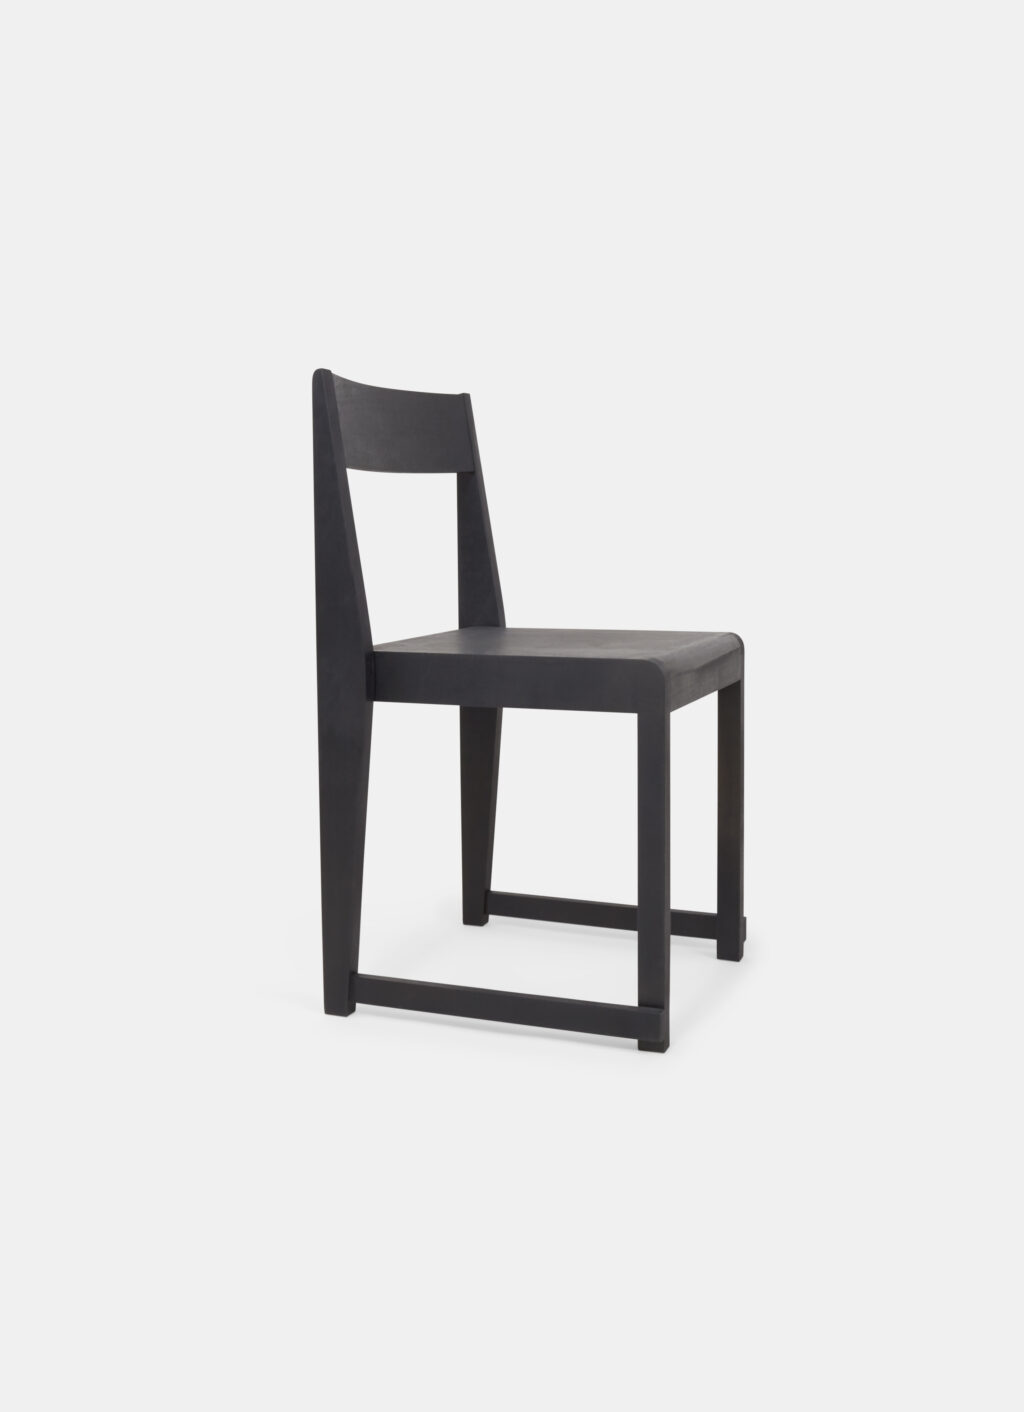 Frama - Chair 01 - Ash Black Birch